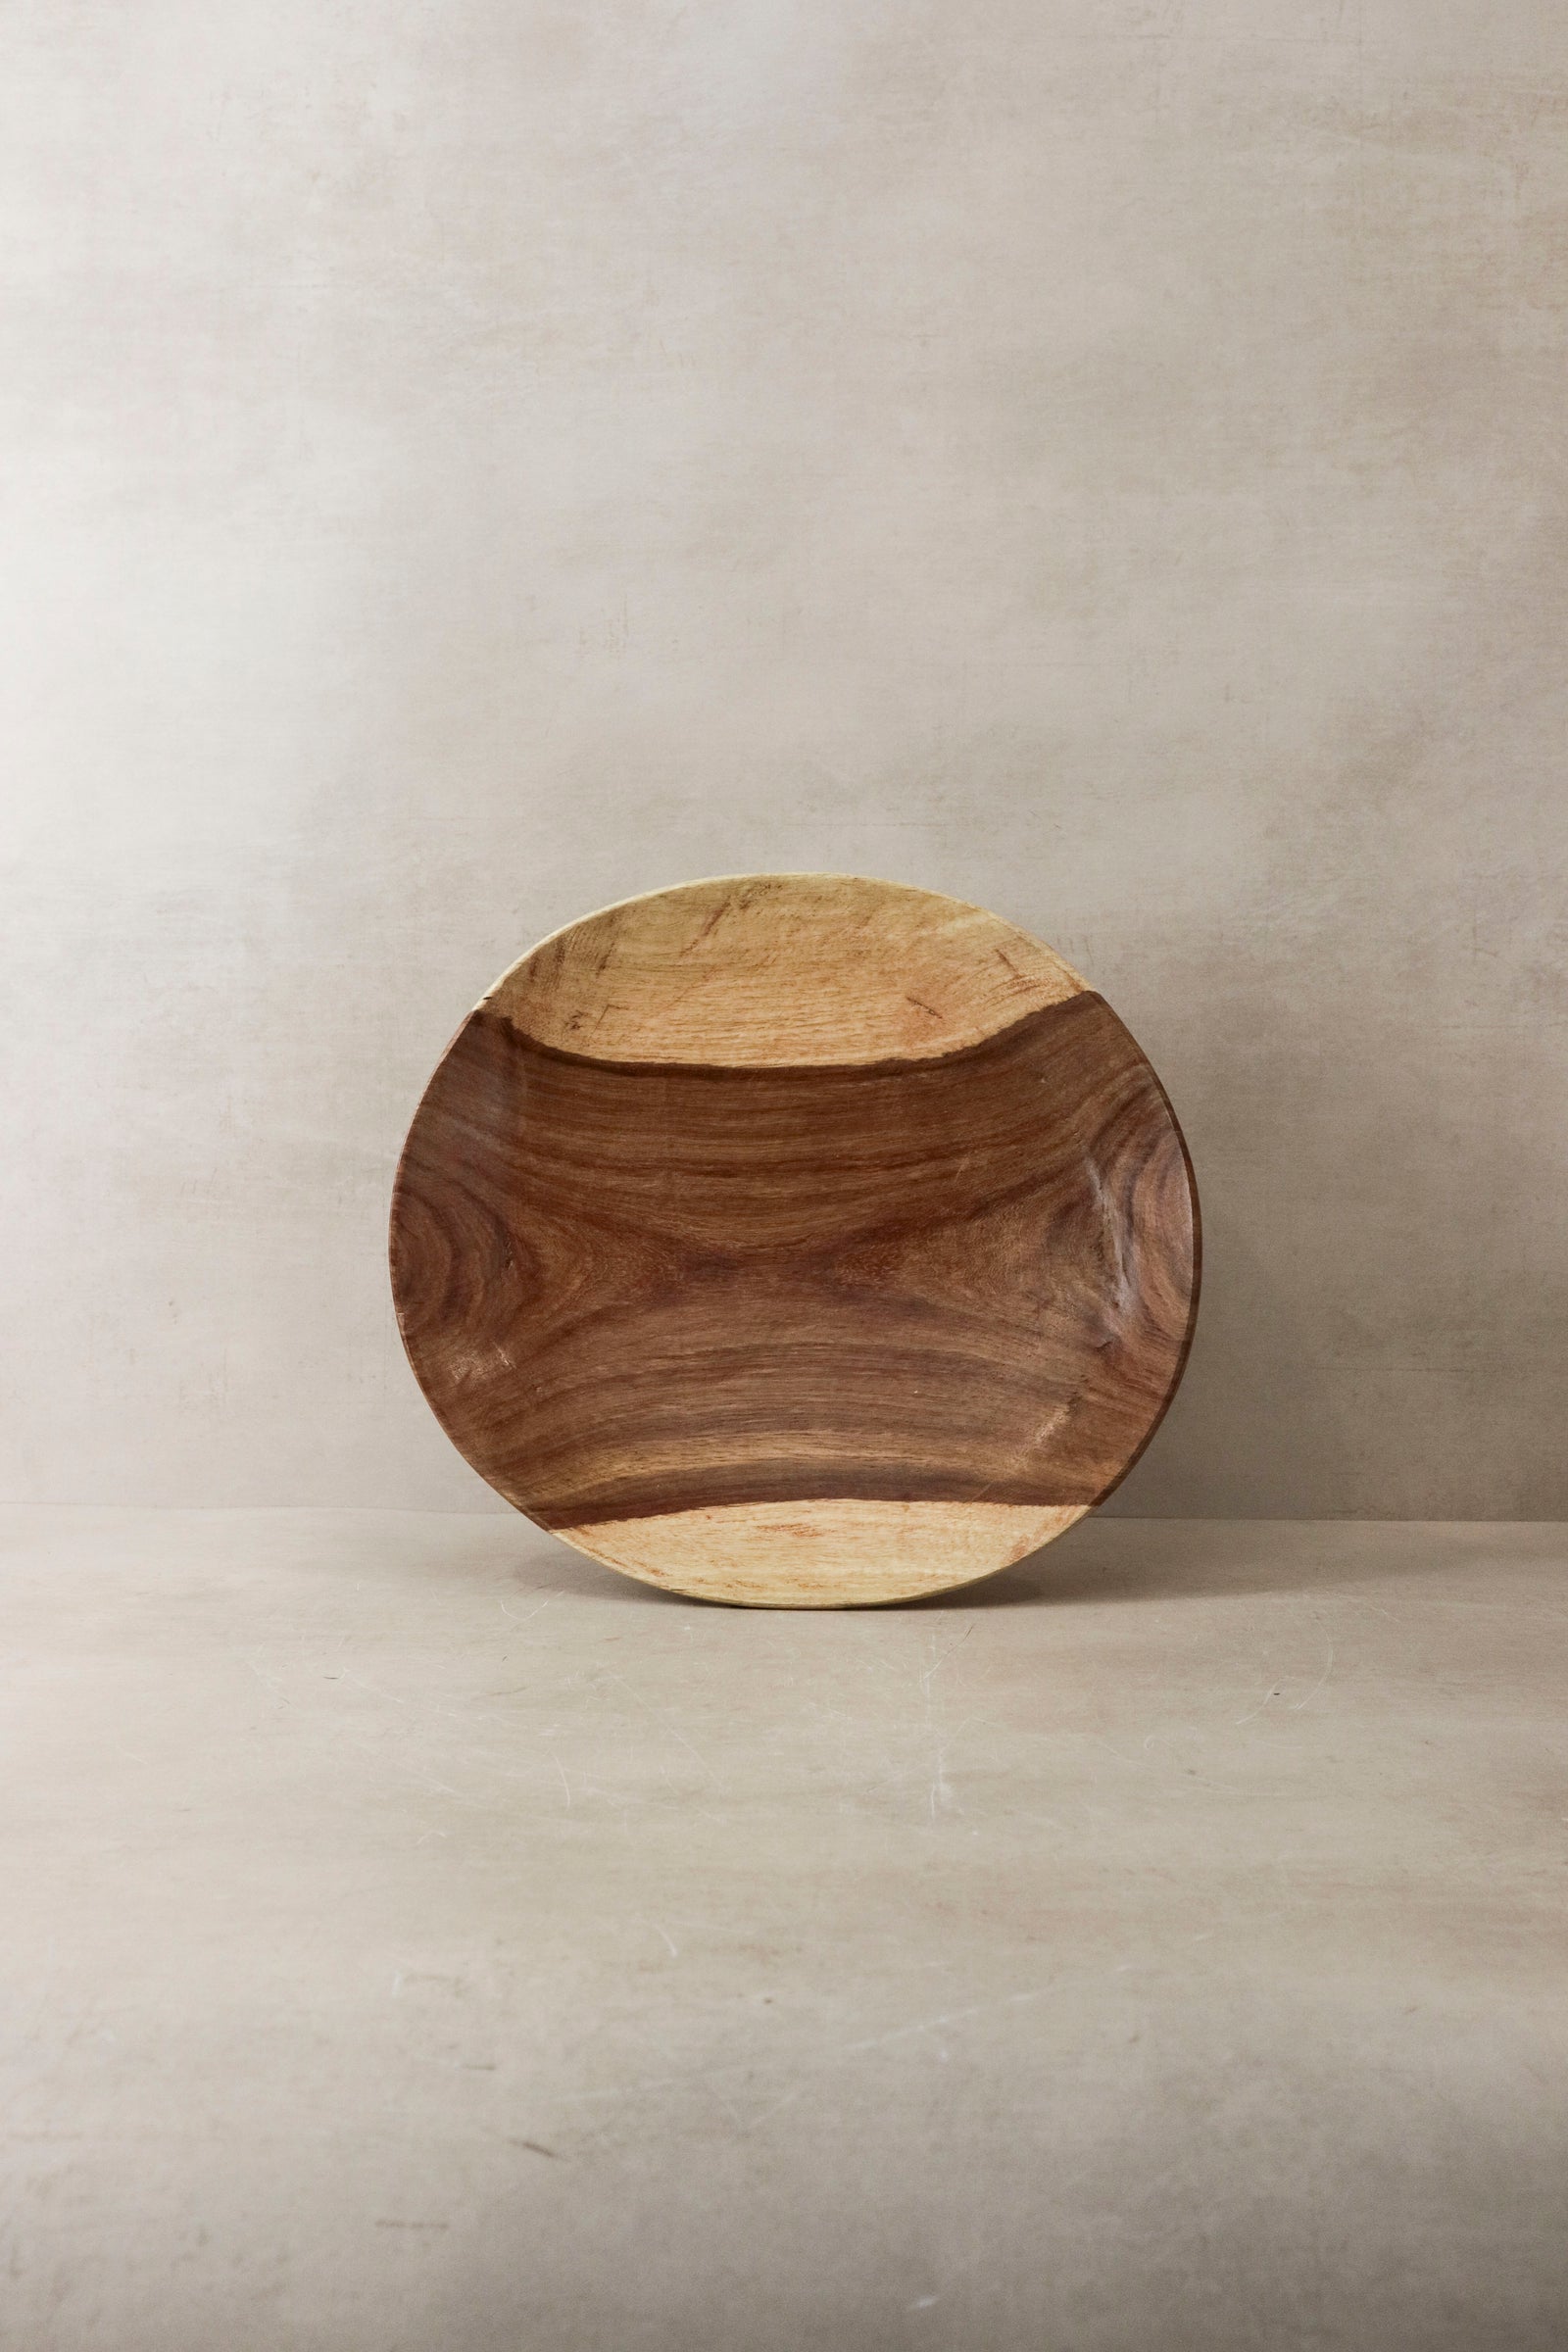 Handmade wooden bowl, Zimbabwe - 13.4